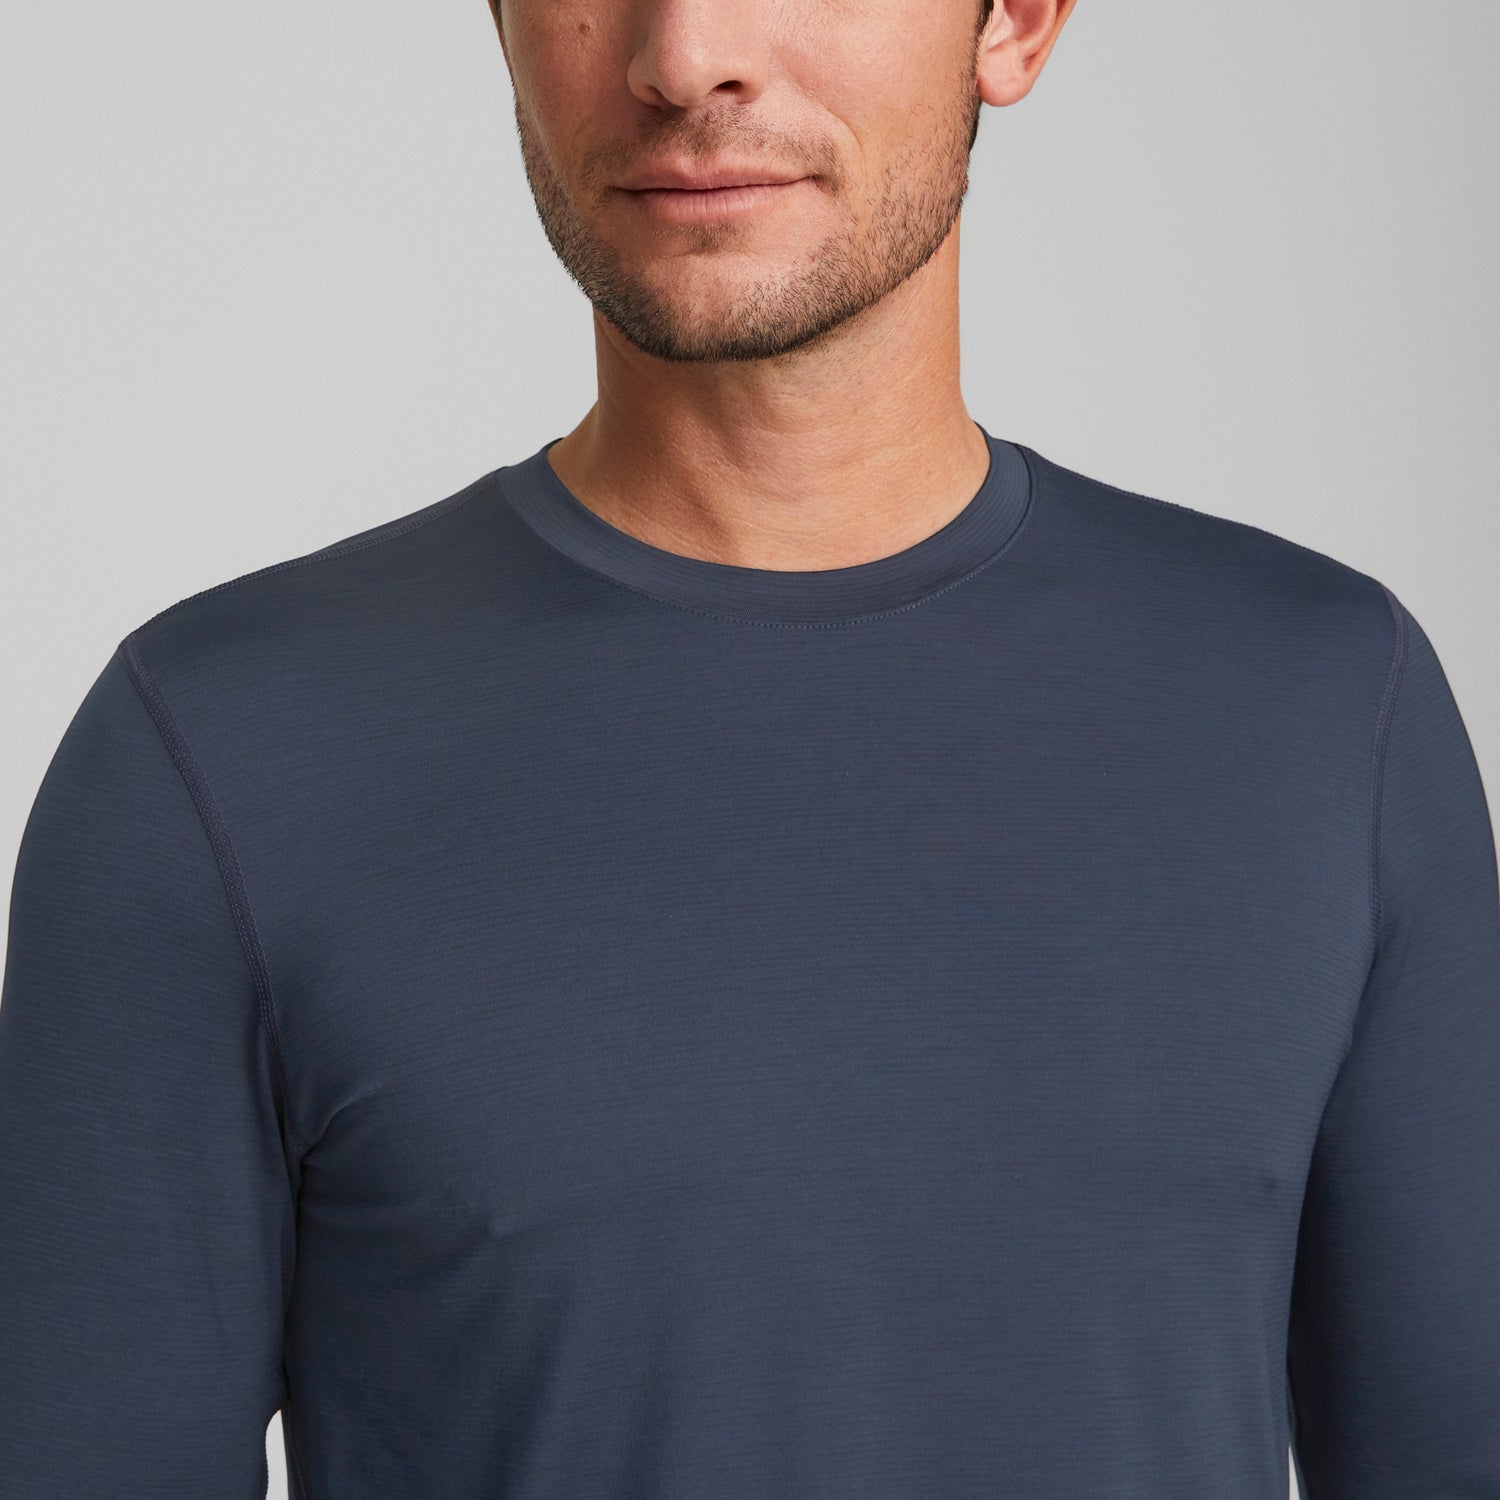 ZRBYWB Golf Shirts For Men Zipper Long Sleeve Solid Shirt Outdoor